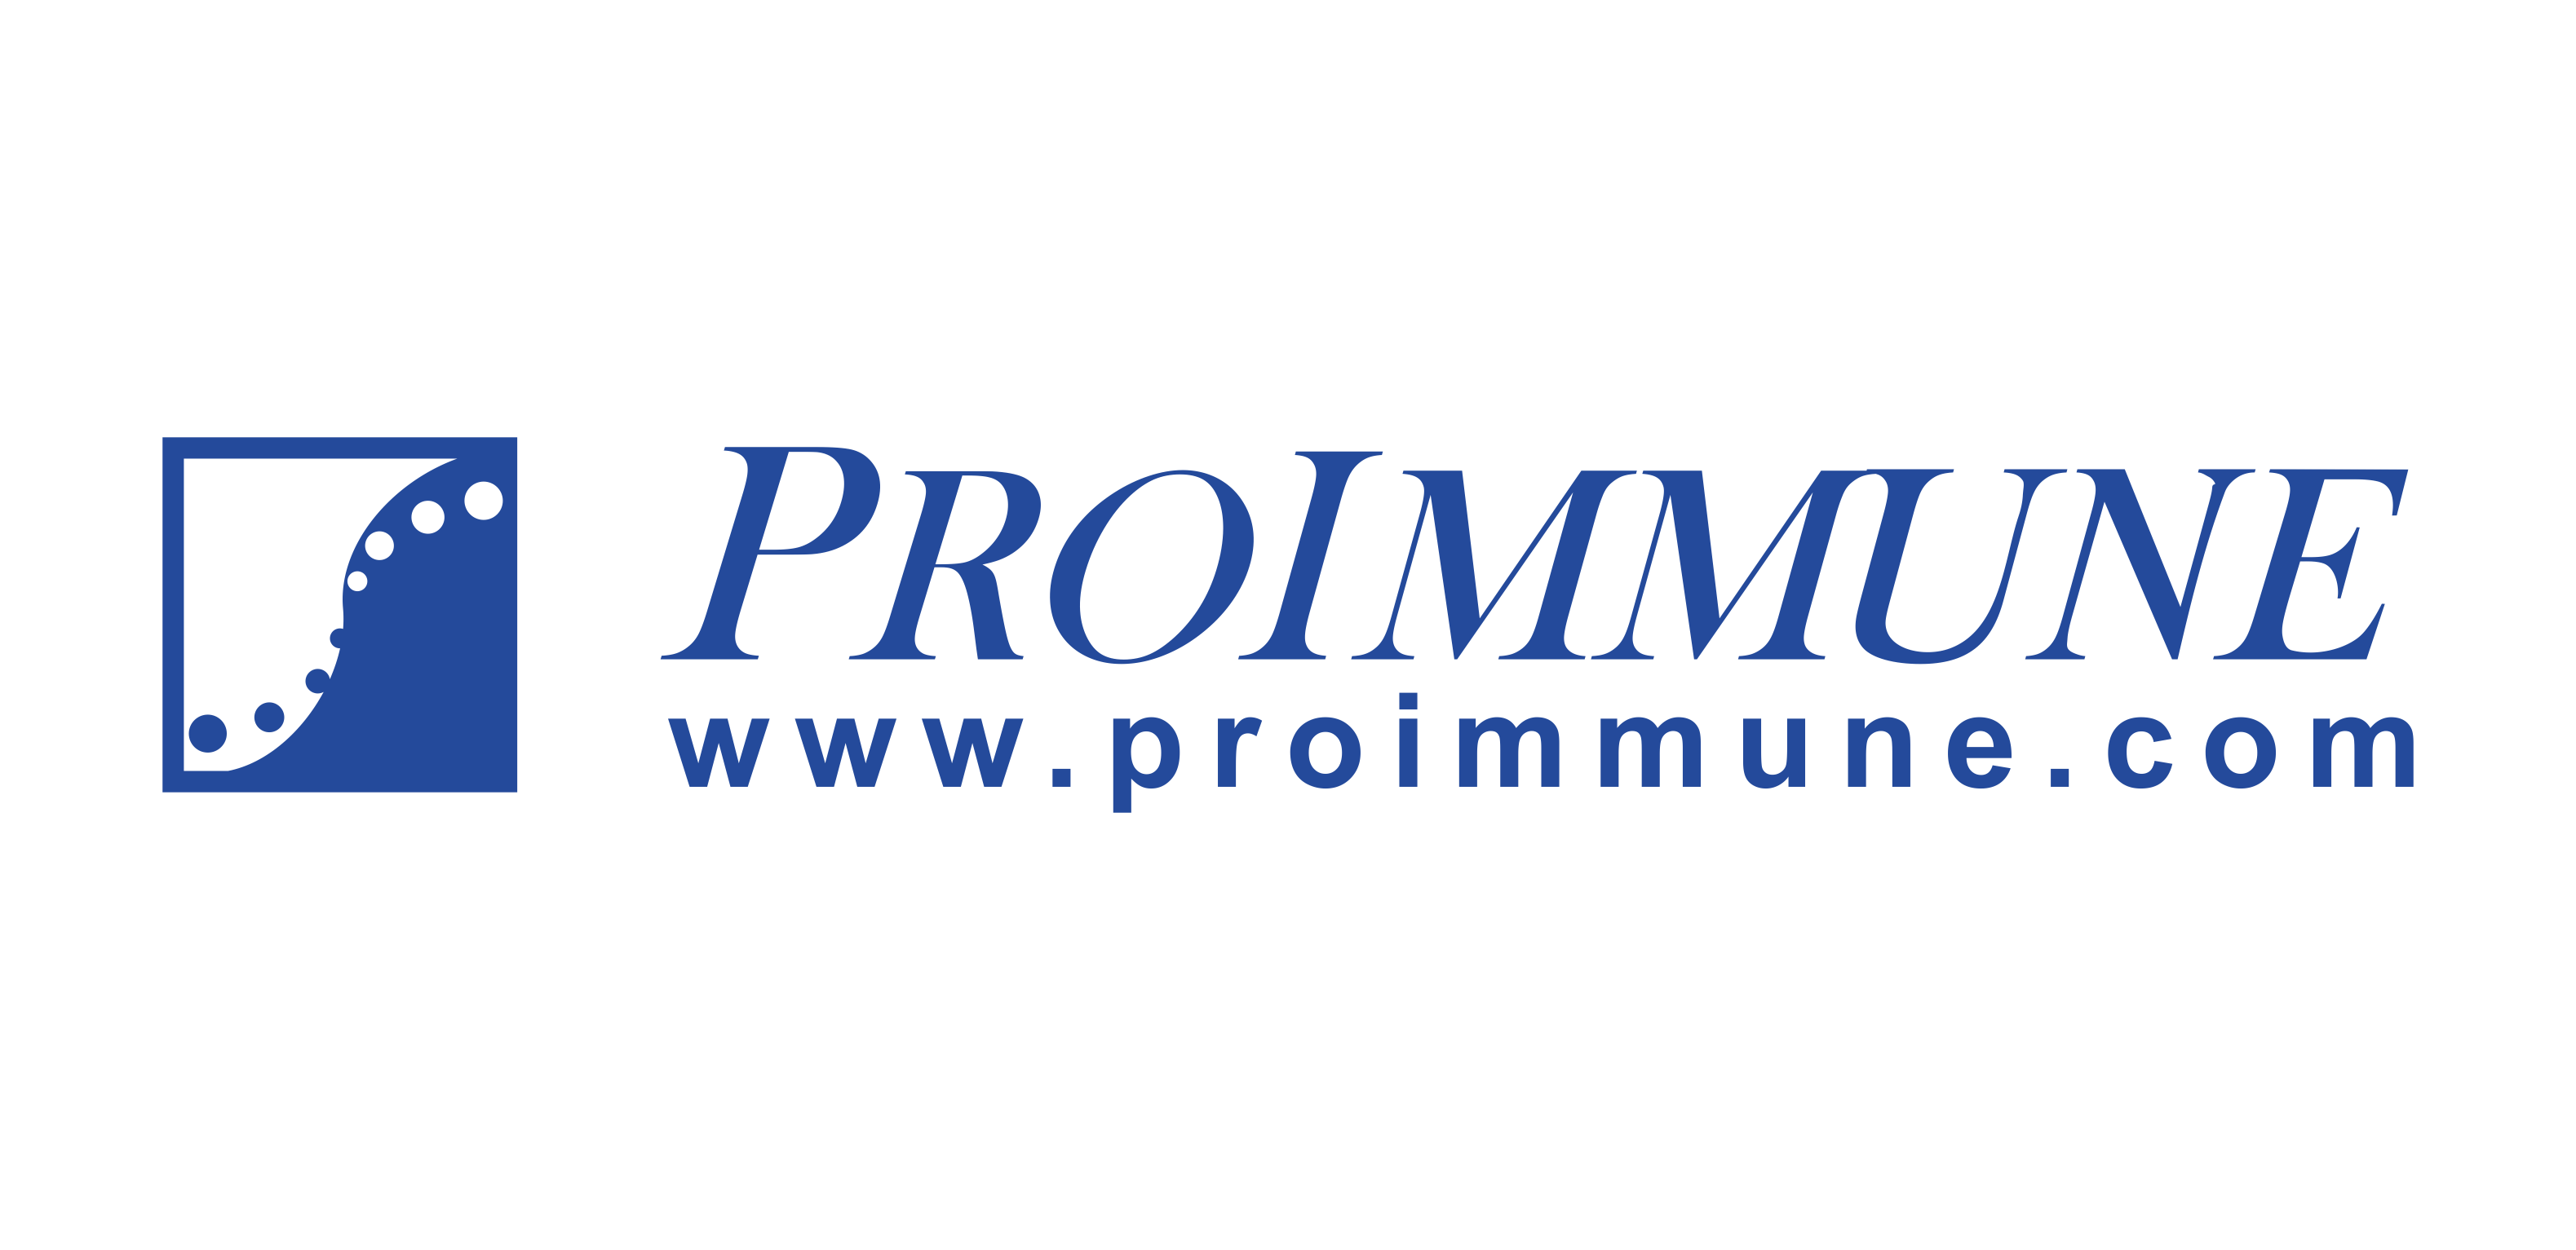 Proimmune